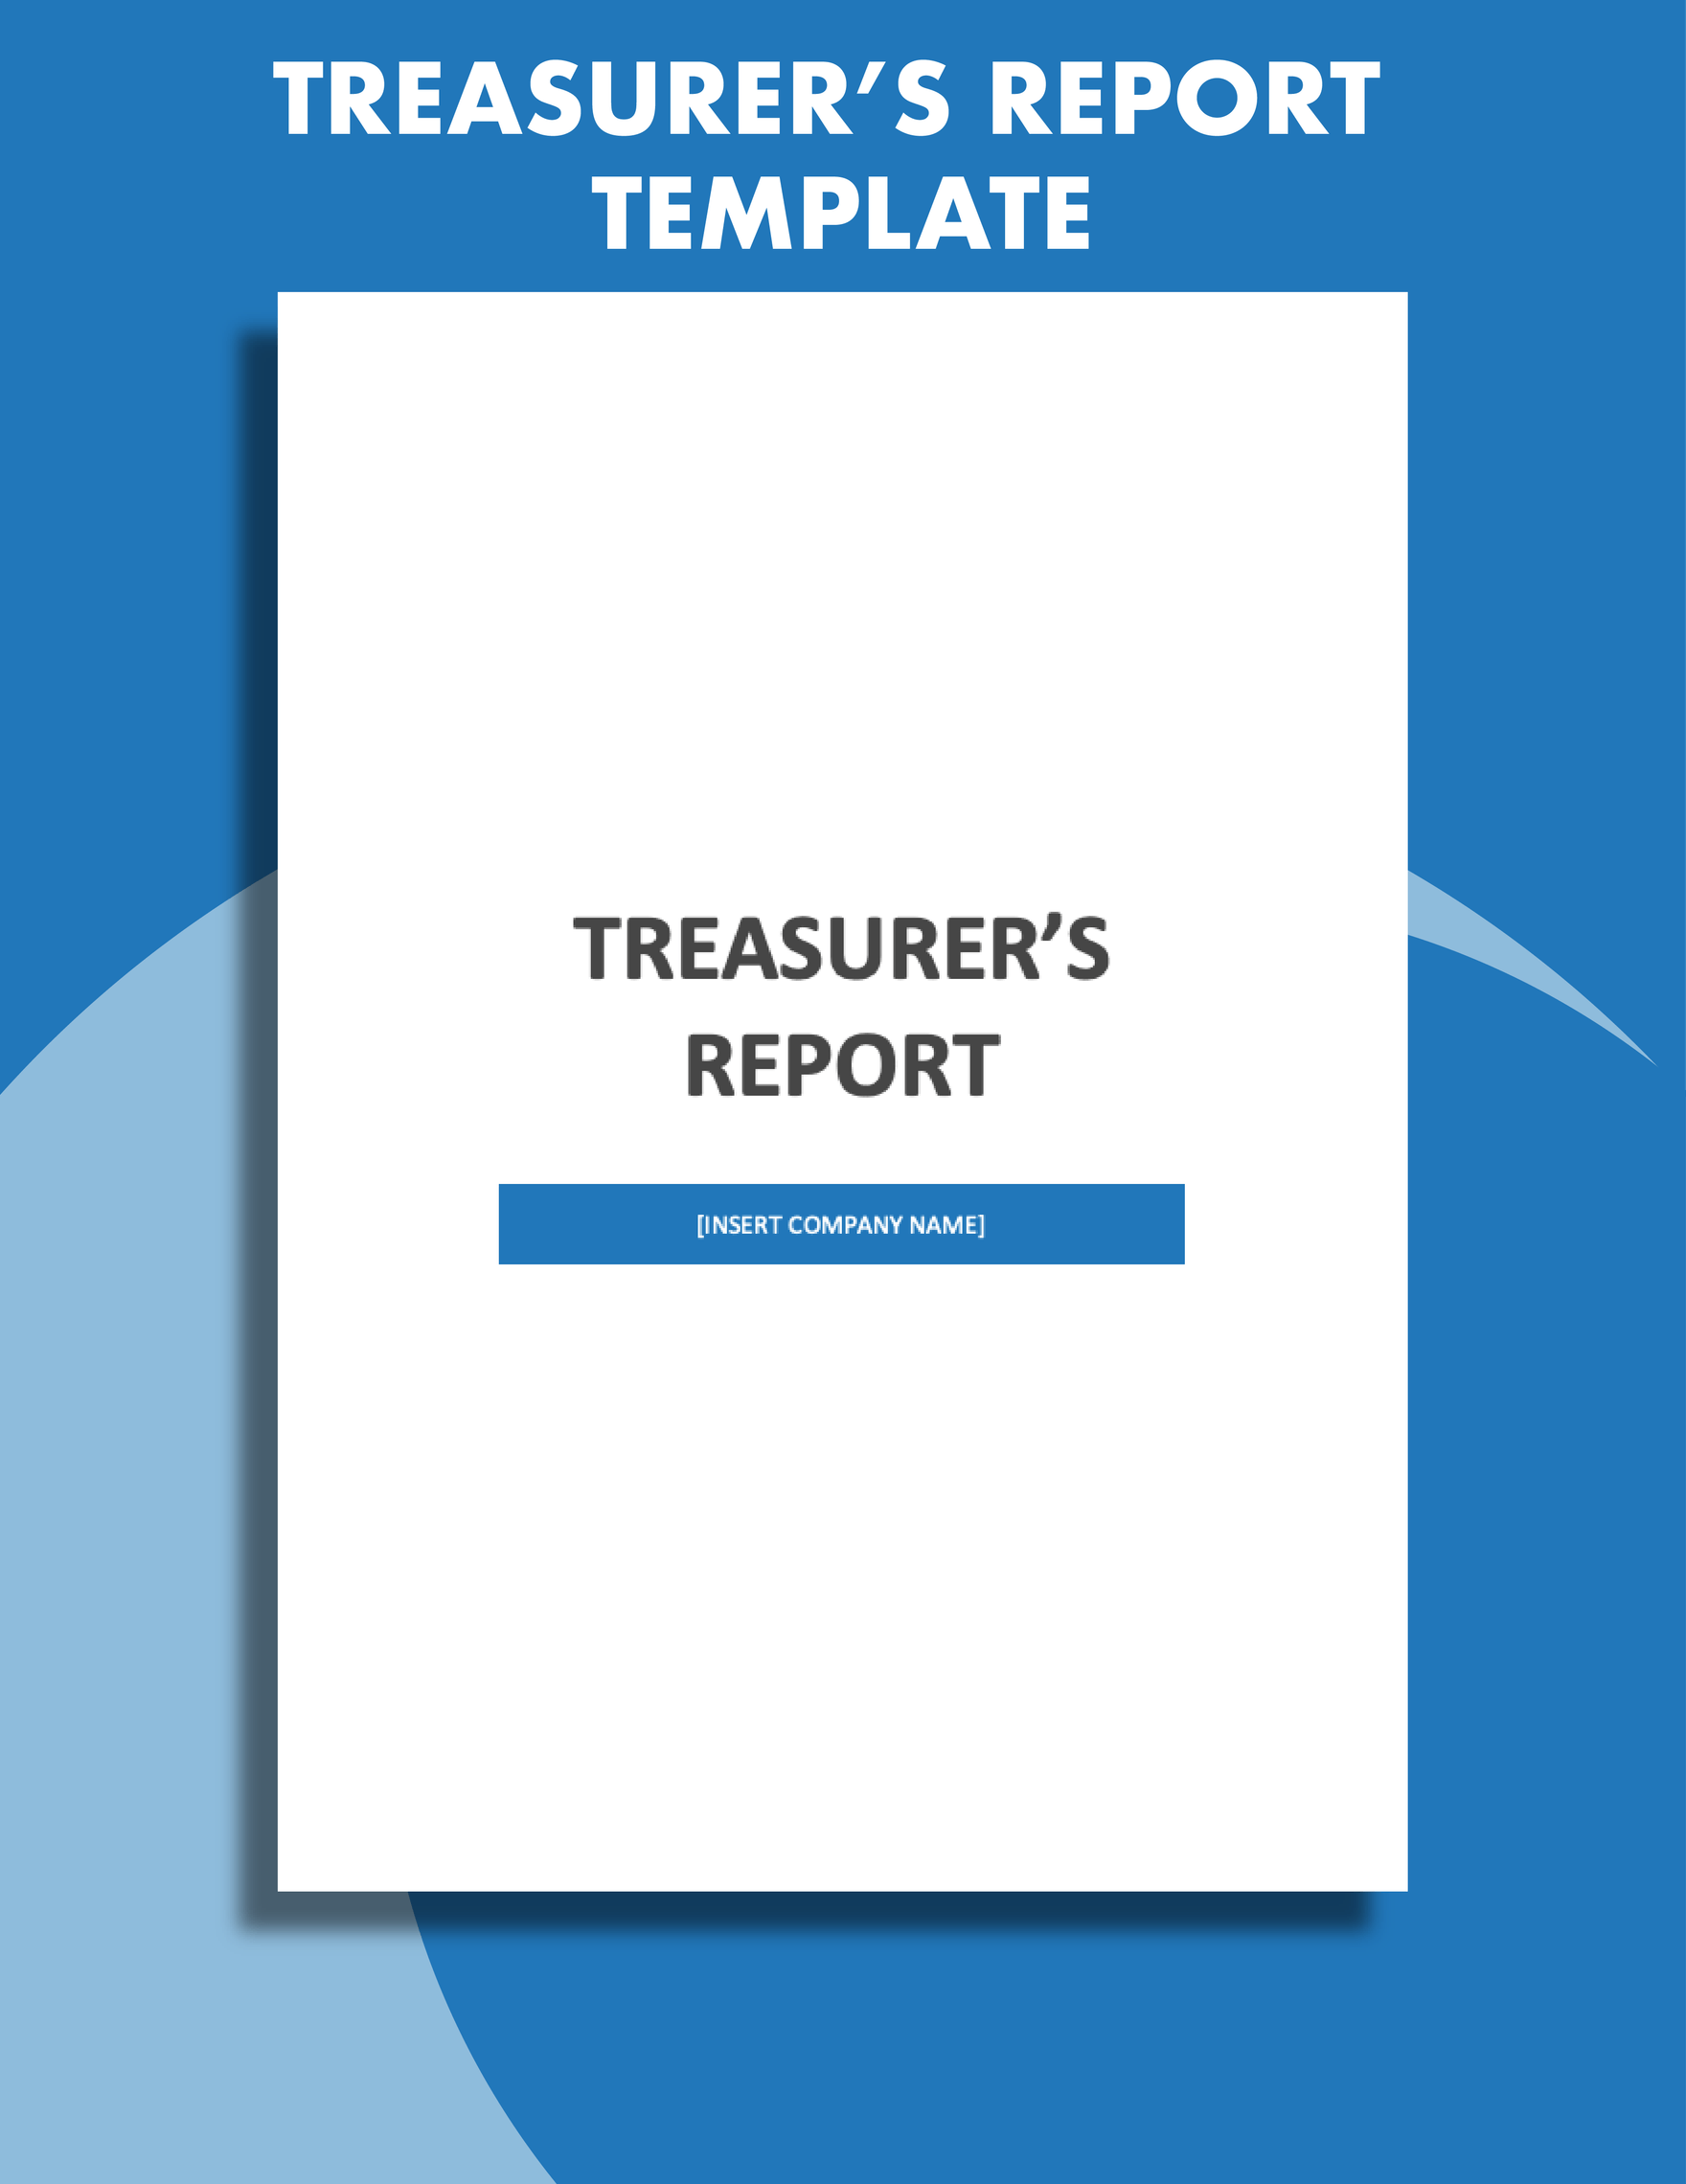 Free Treasurer Report Template Download in Word, Google Docs, Apple